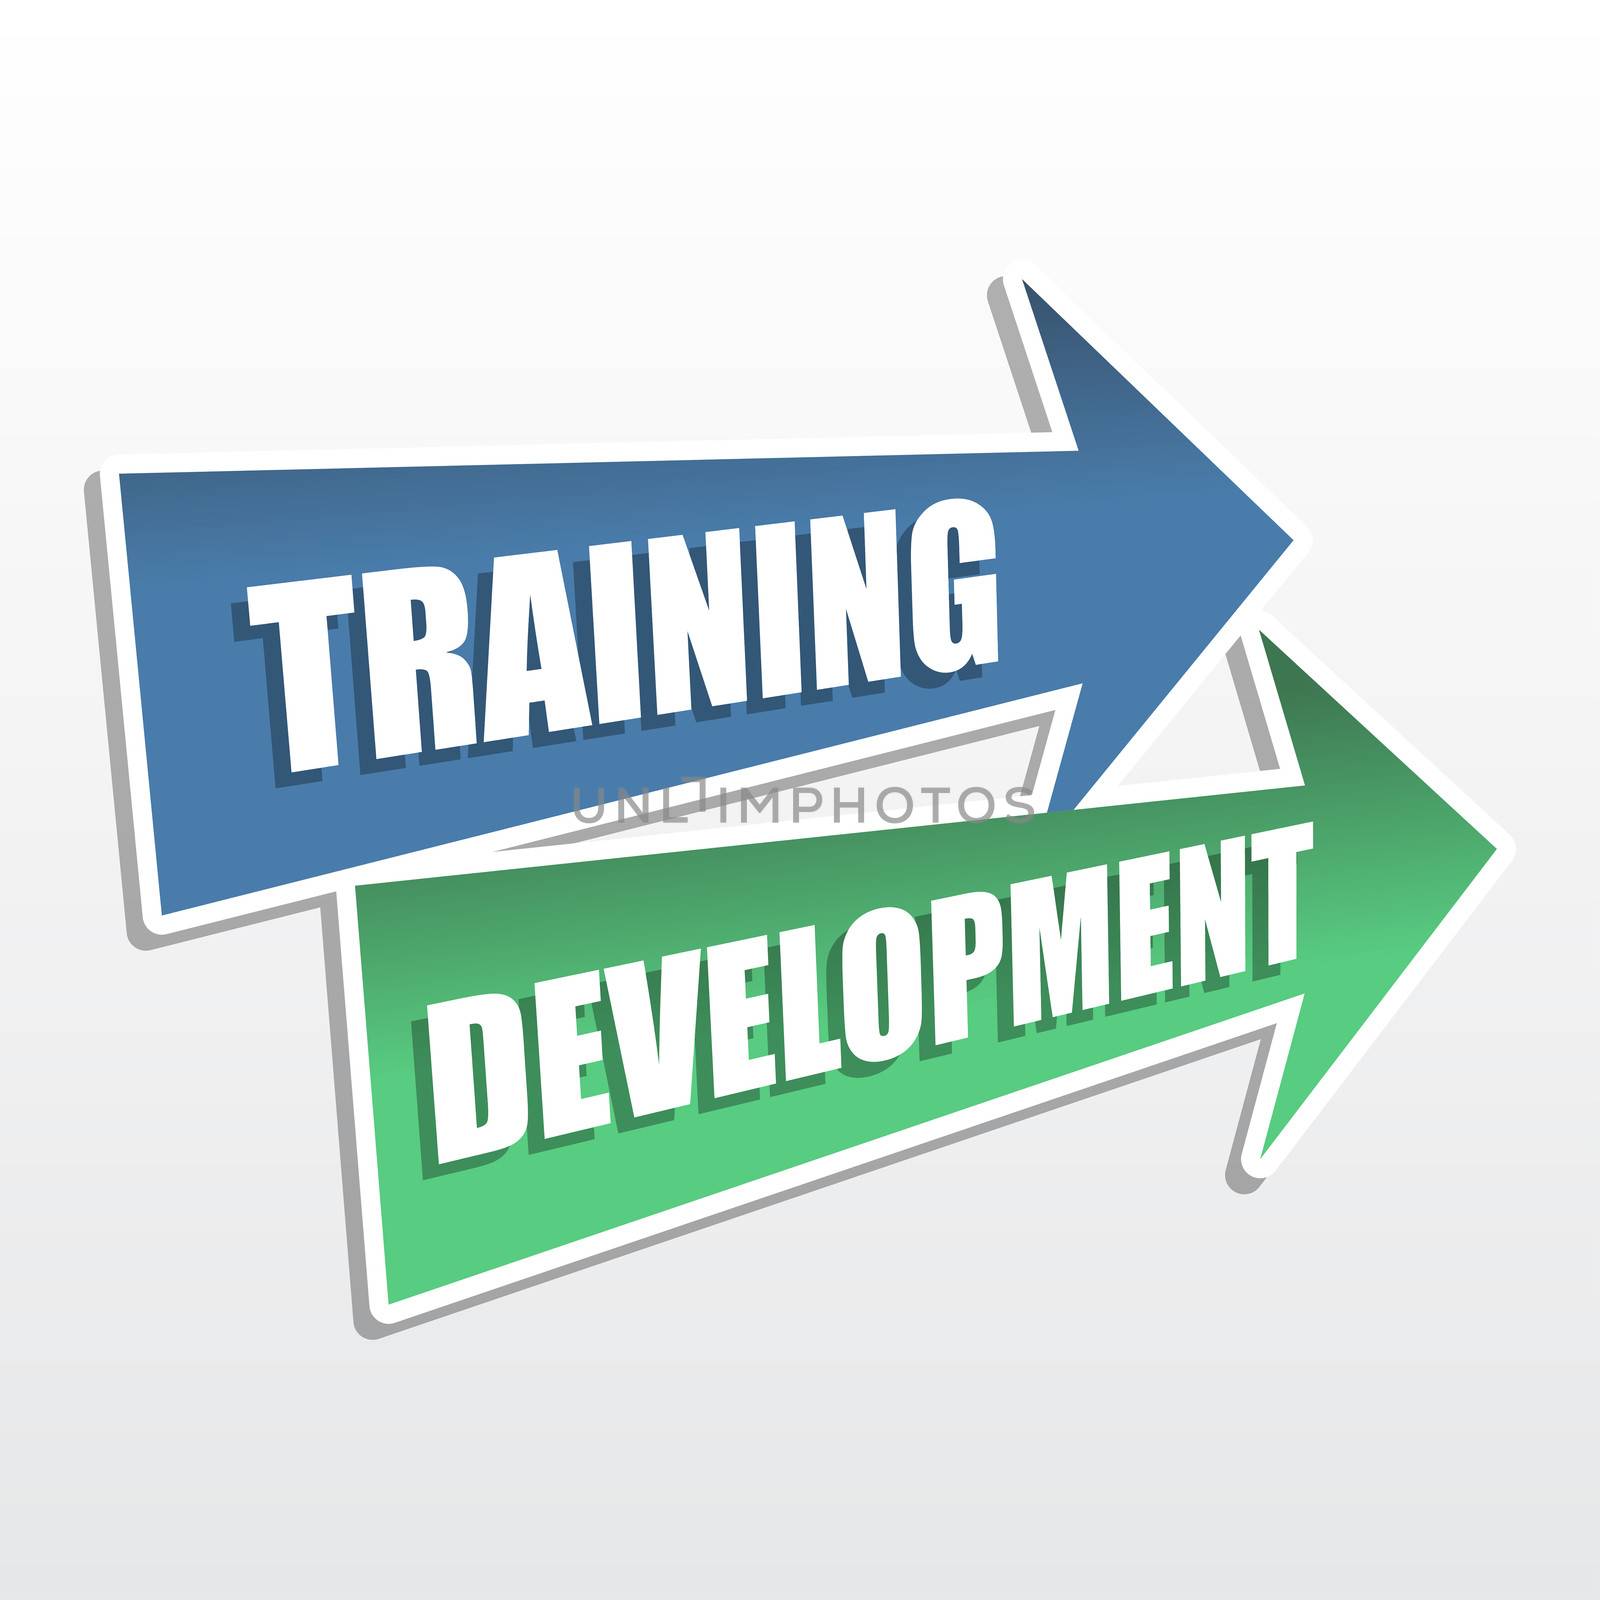 training development - text in arrows, business education concept, flat design